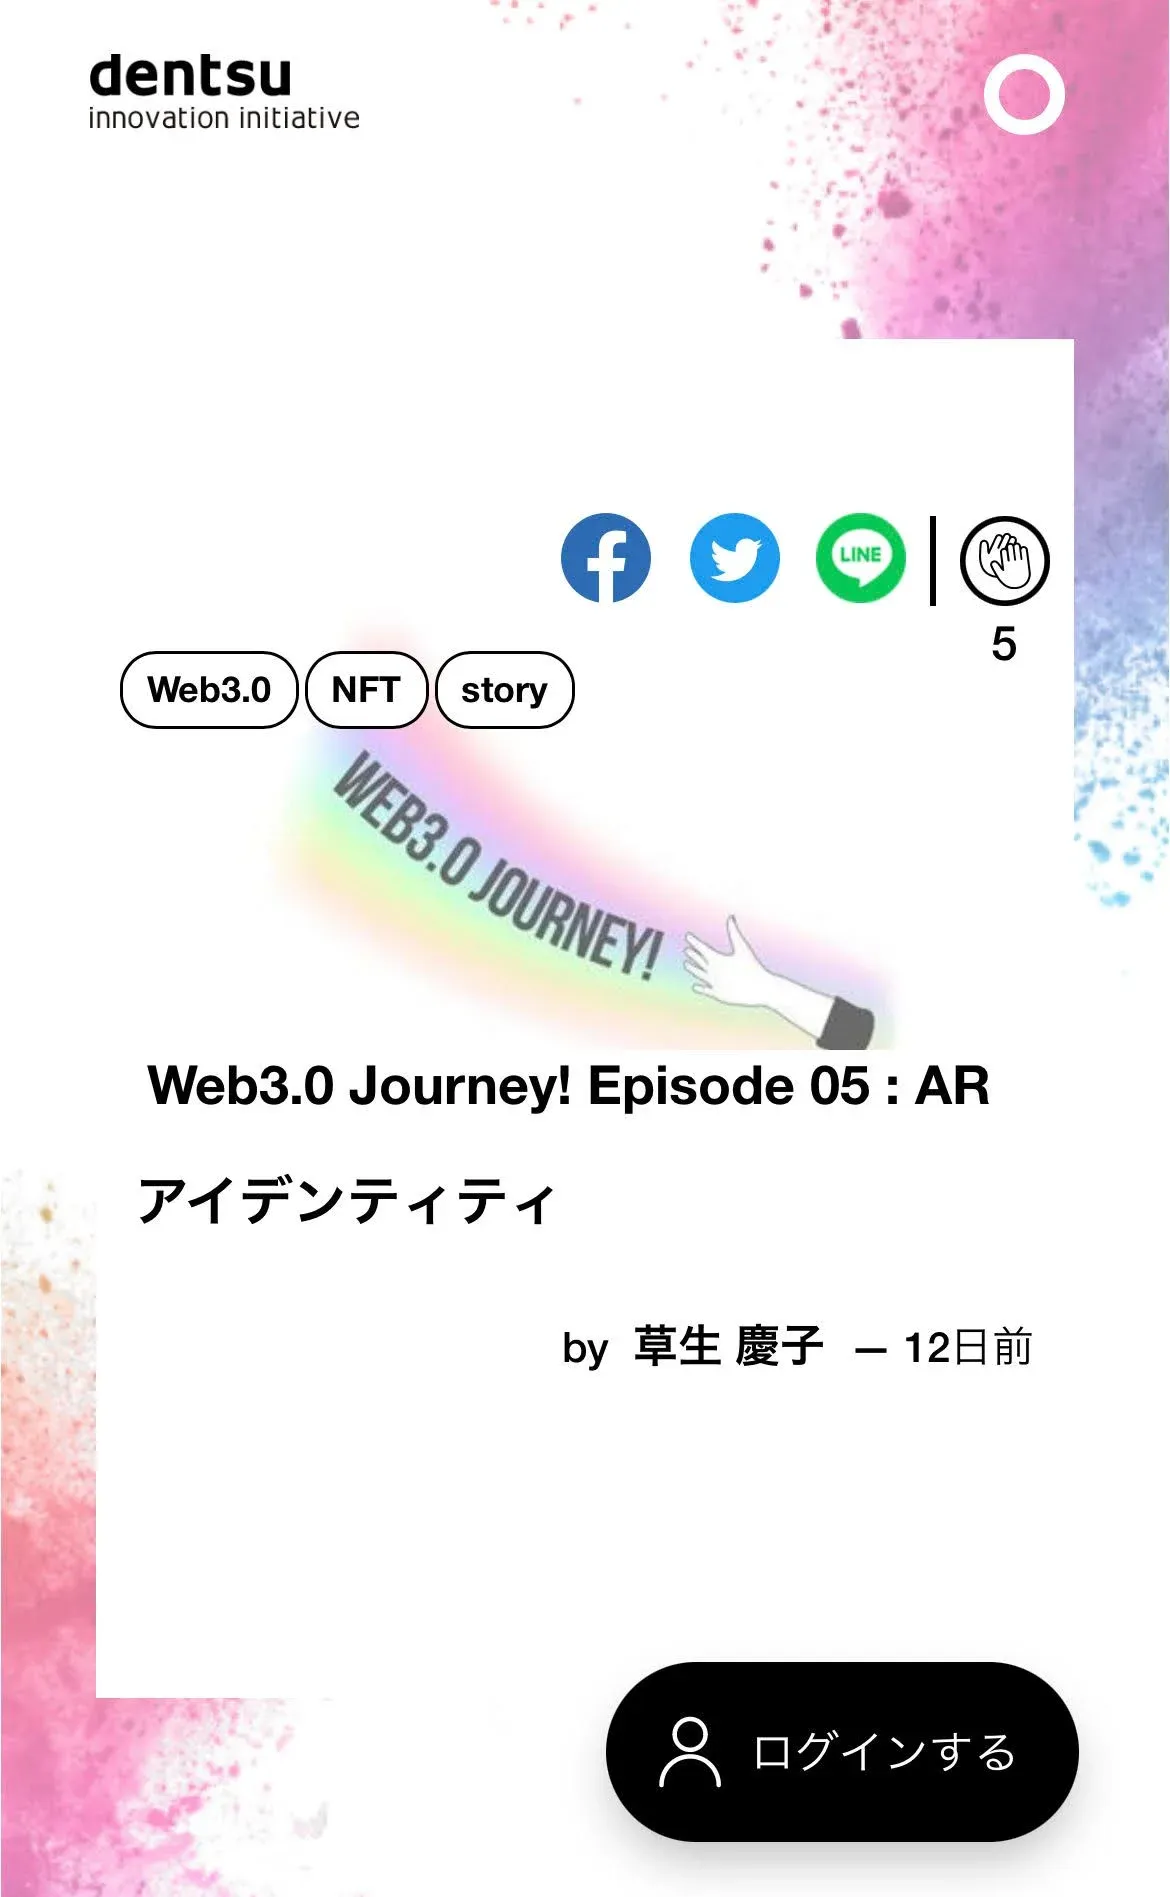 Web3.0 Journey! Episode 07 : SSI (Self-Sovereign Identity) - 自己主権型アイデンティティ